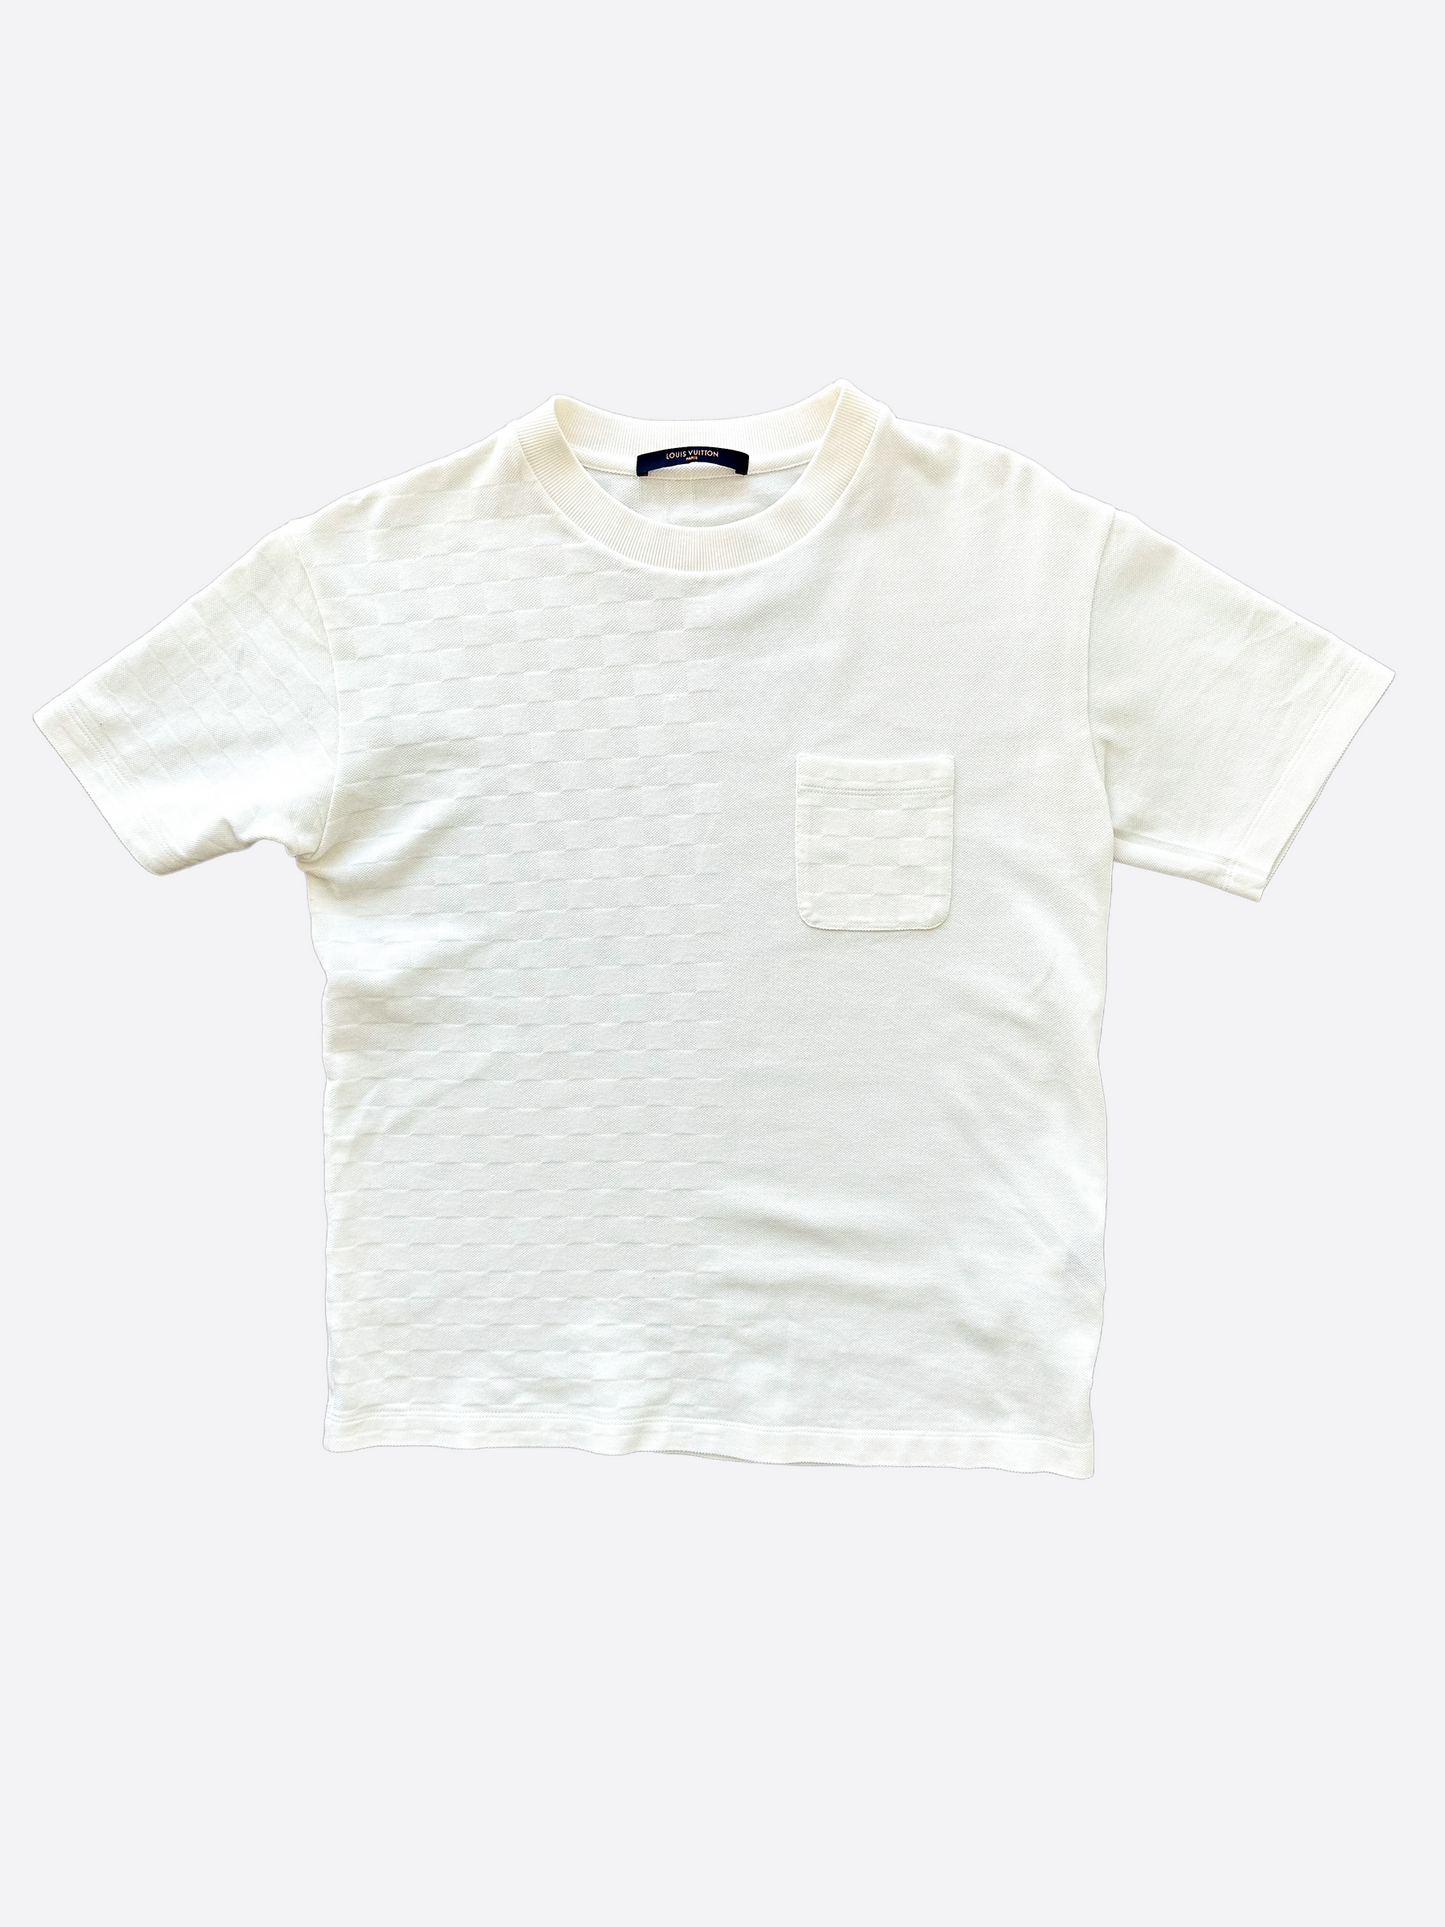 Louis Vuitton Half Damier Pocket T-Shirt Milk White. Size L0